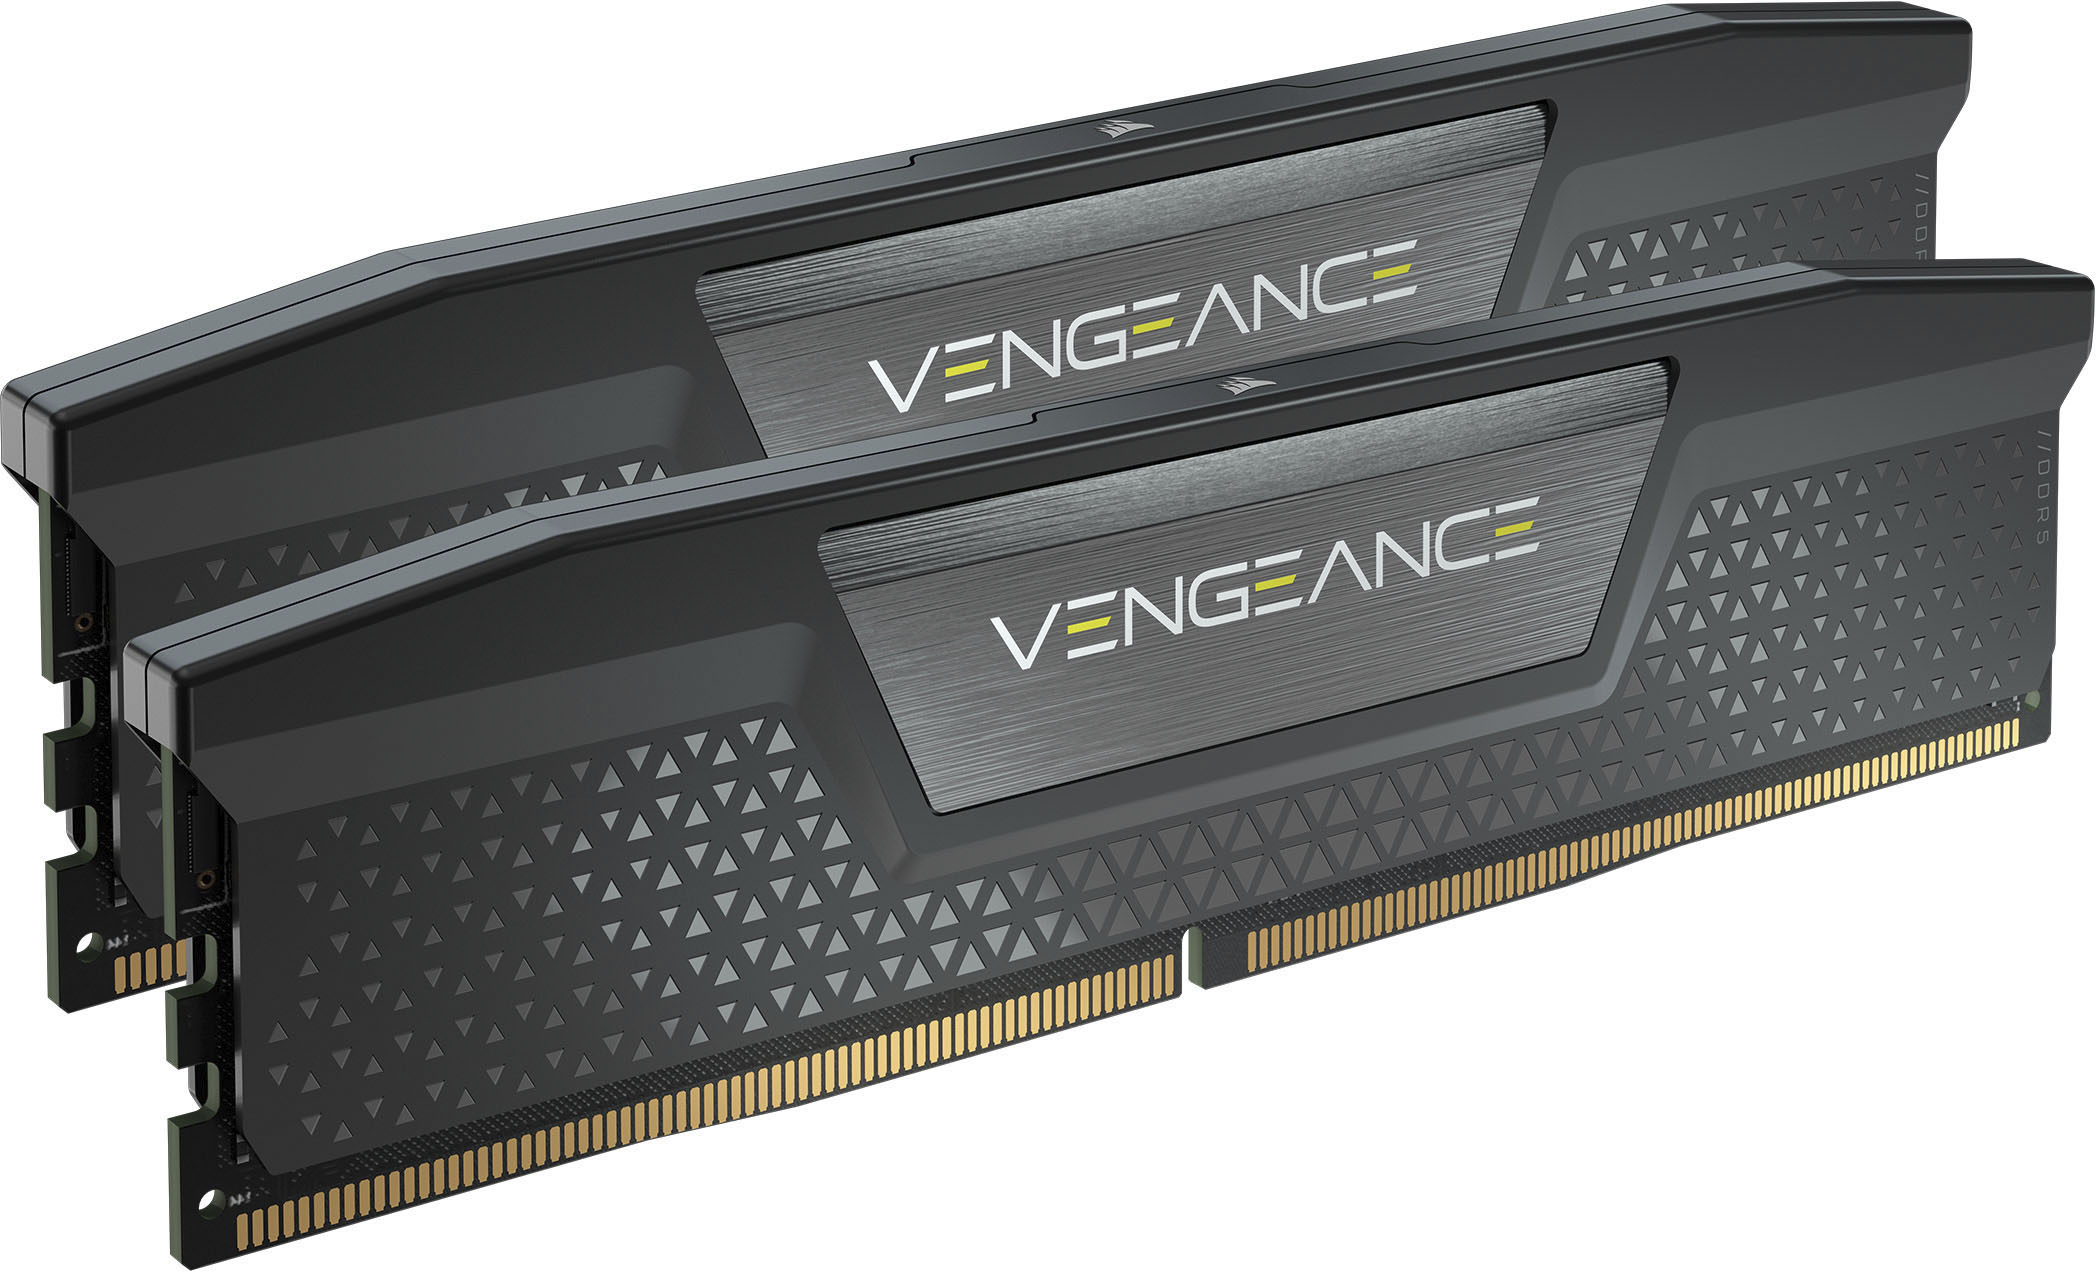 CORSAIR VENGEANCE RGB DDR5 RAM 32GB (2x16GB) 6000MHz CL36 Intel